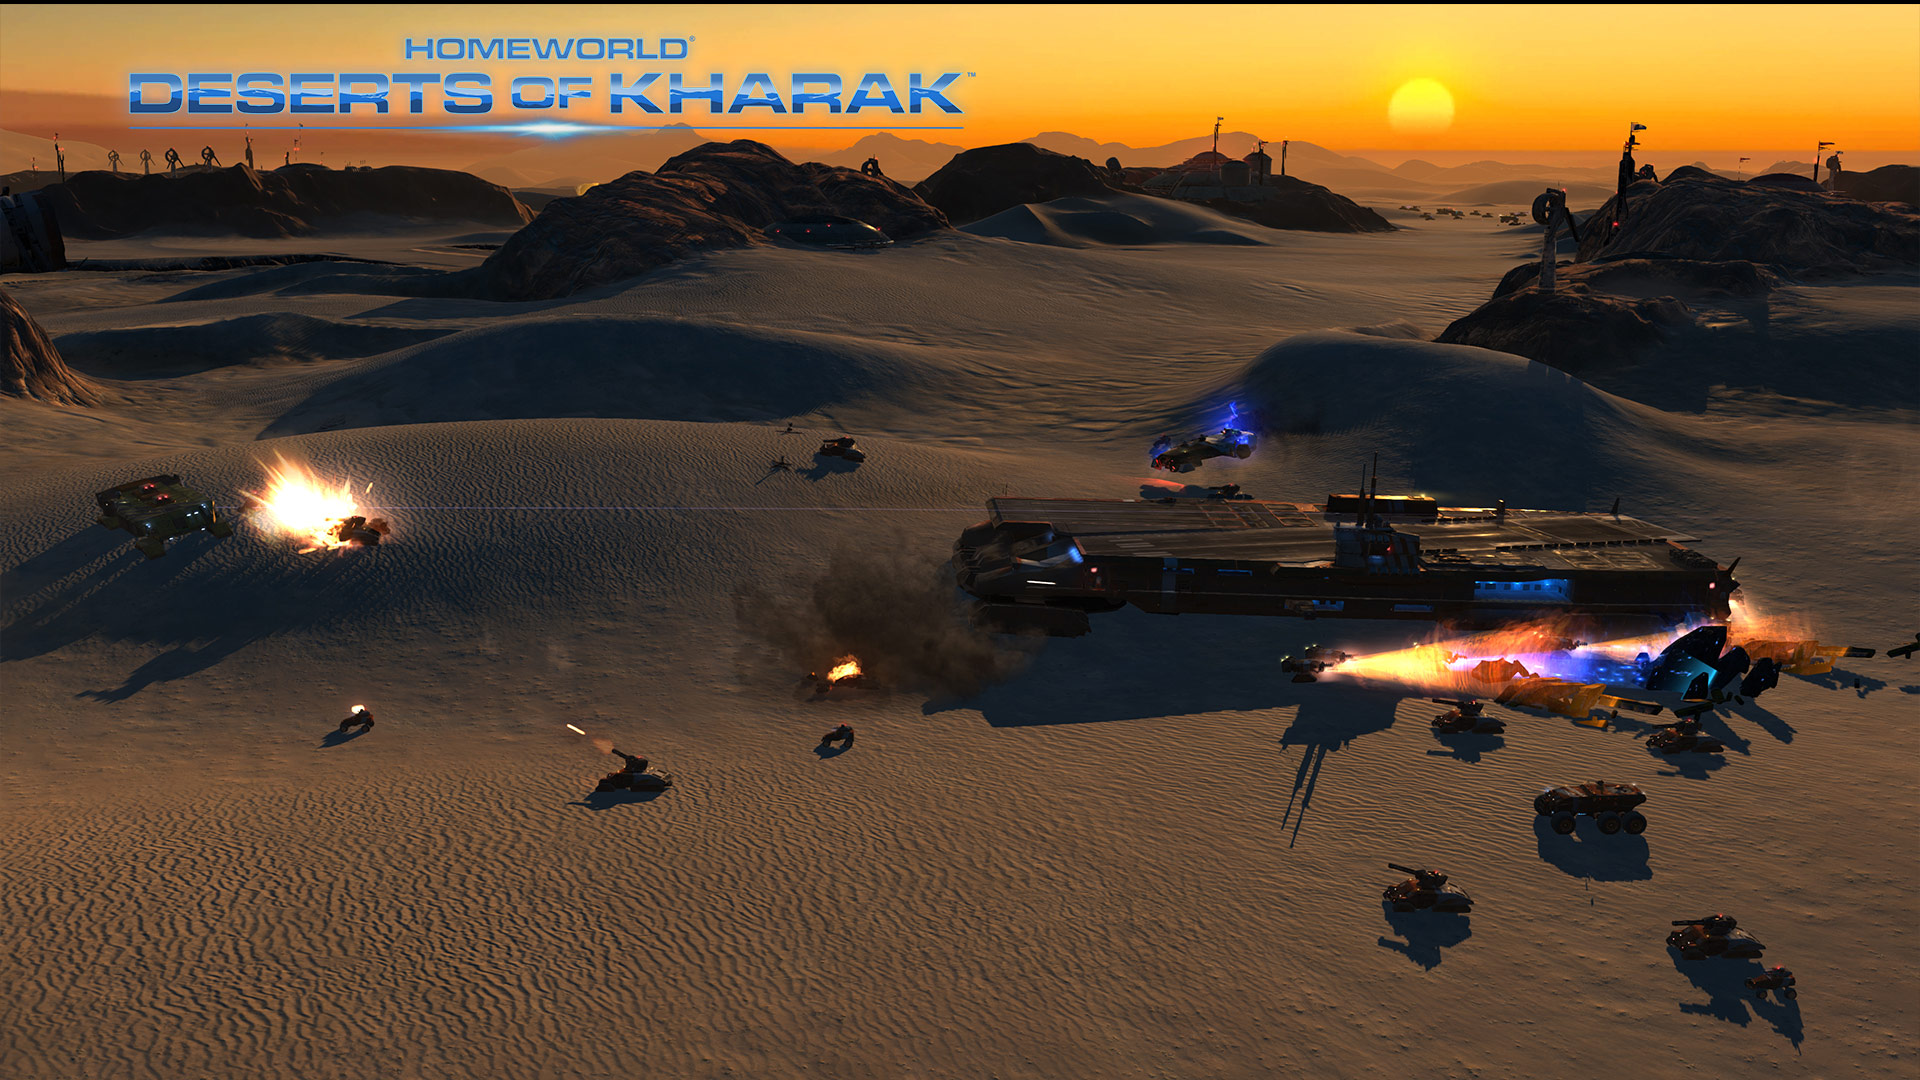 Homeworld: Deserts of Kharak - screenshot 11